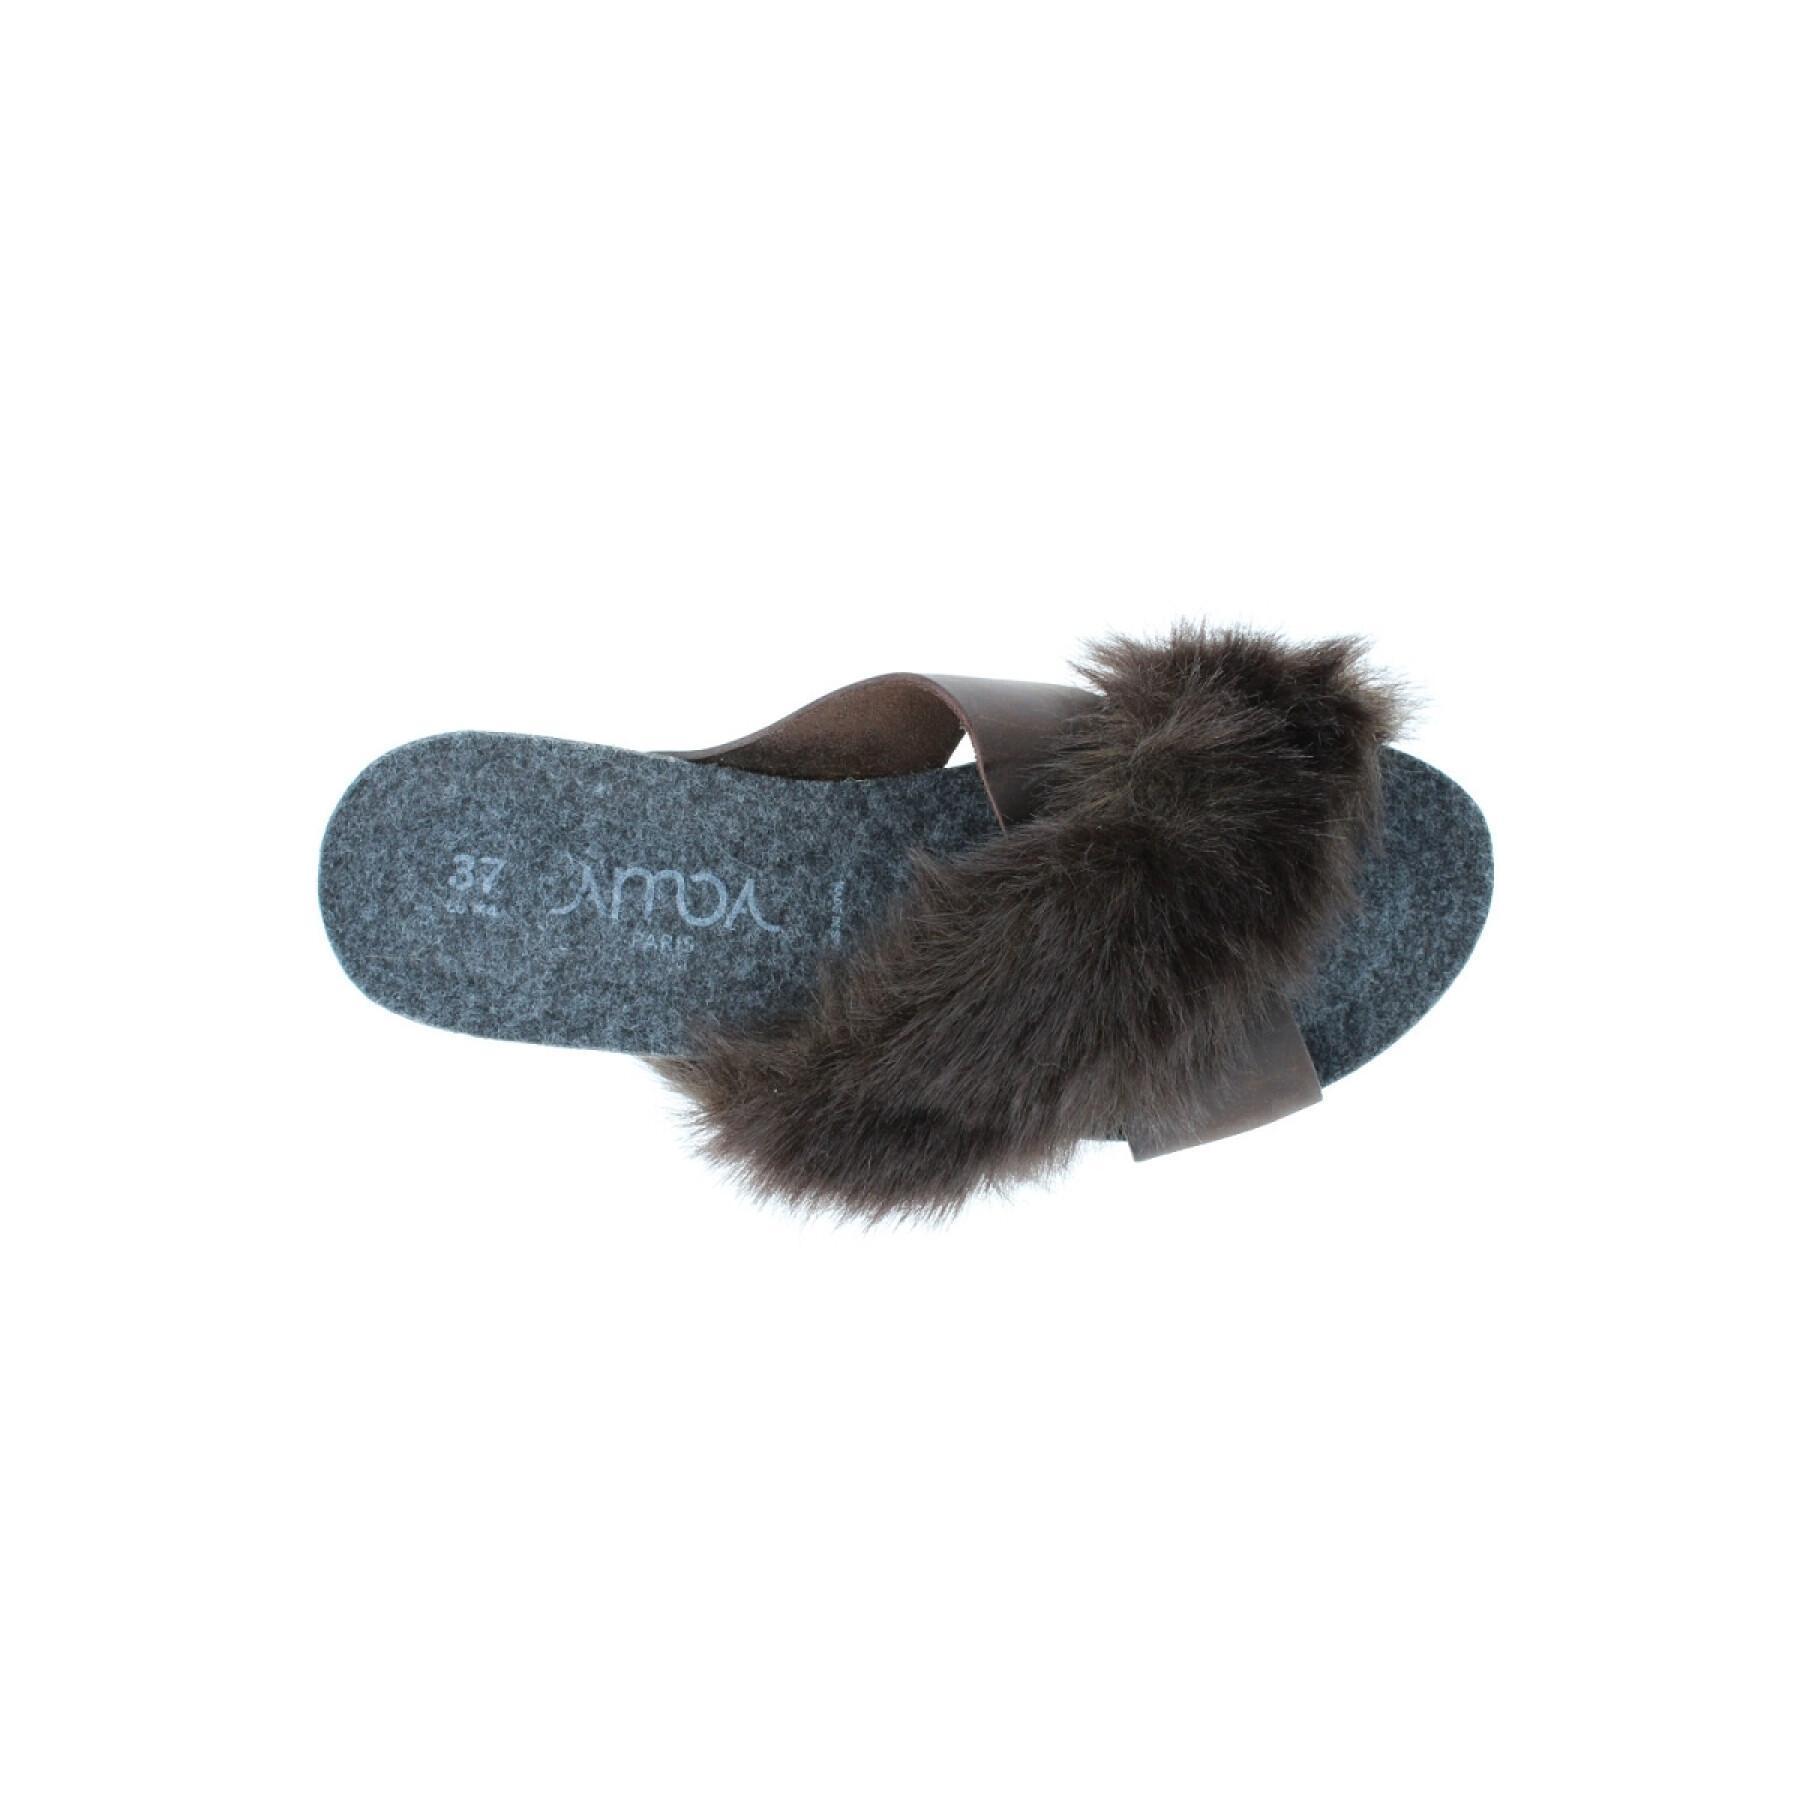 Women's slippers Amoa Scarpe